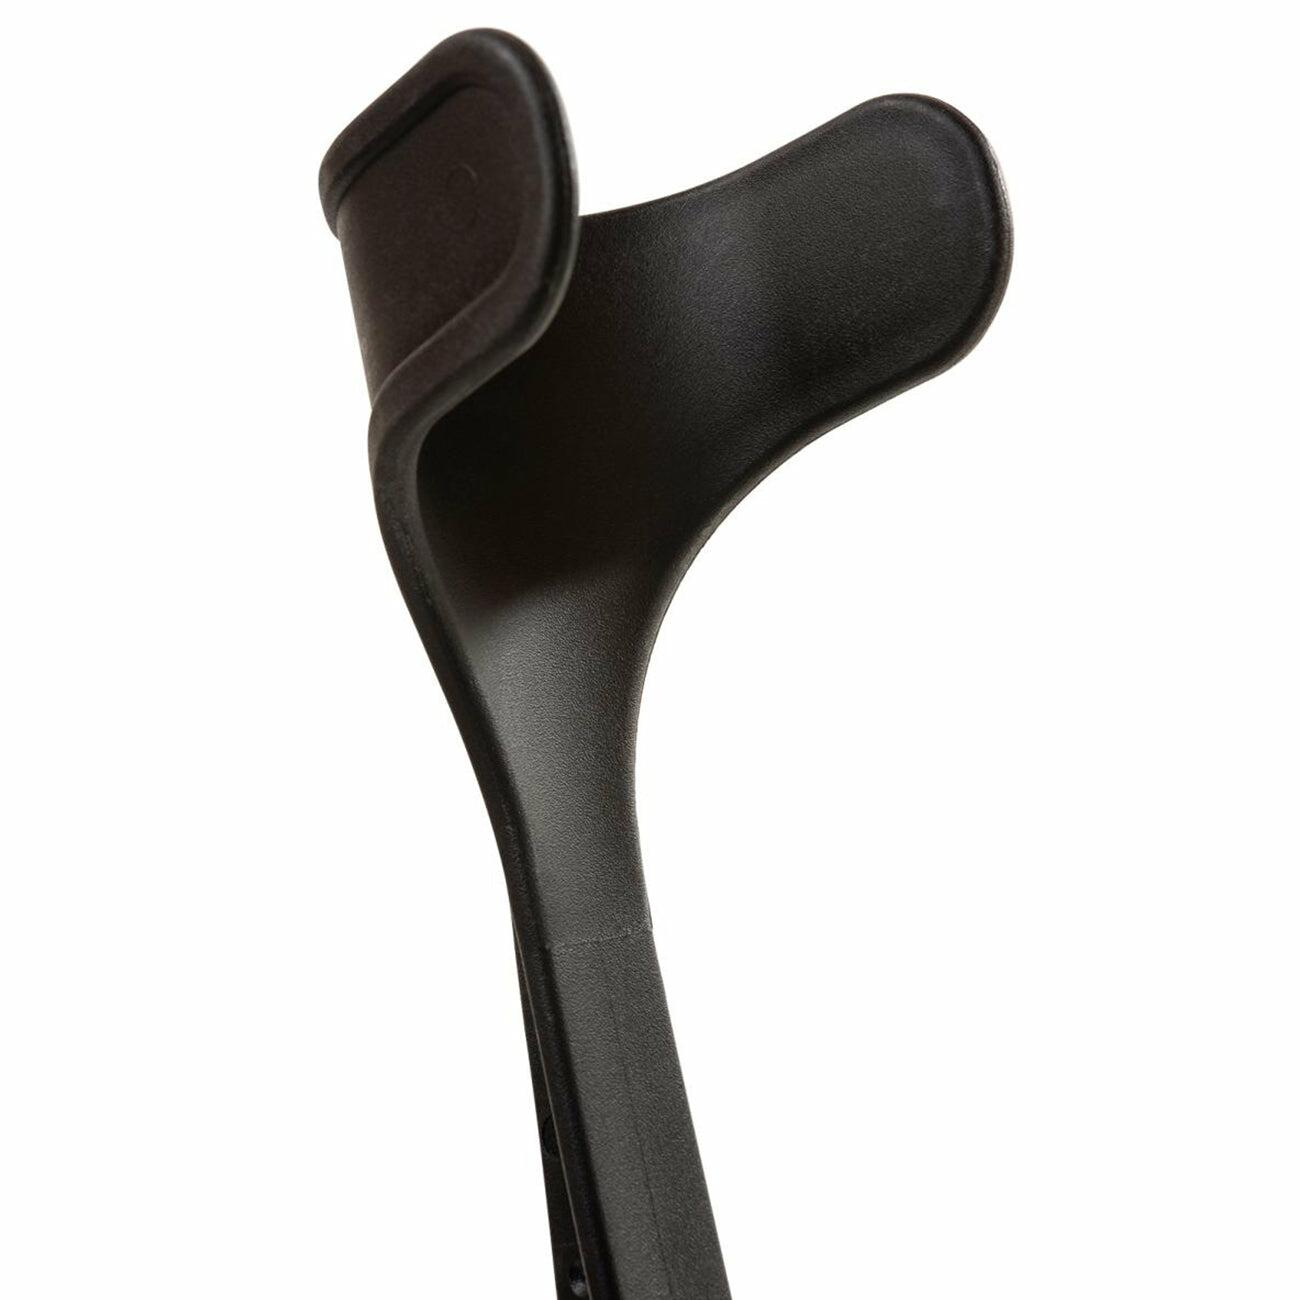 The open cuff of the black Flexyfoot Soft Grip Open Cuff Crutch